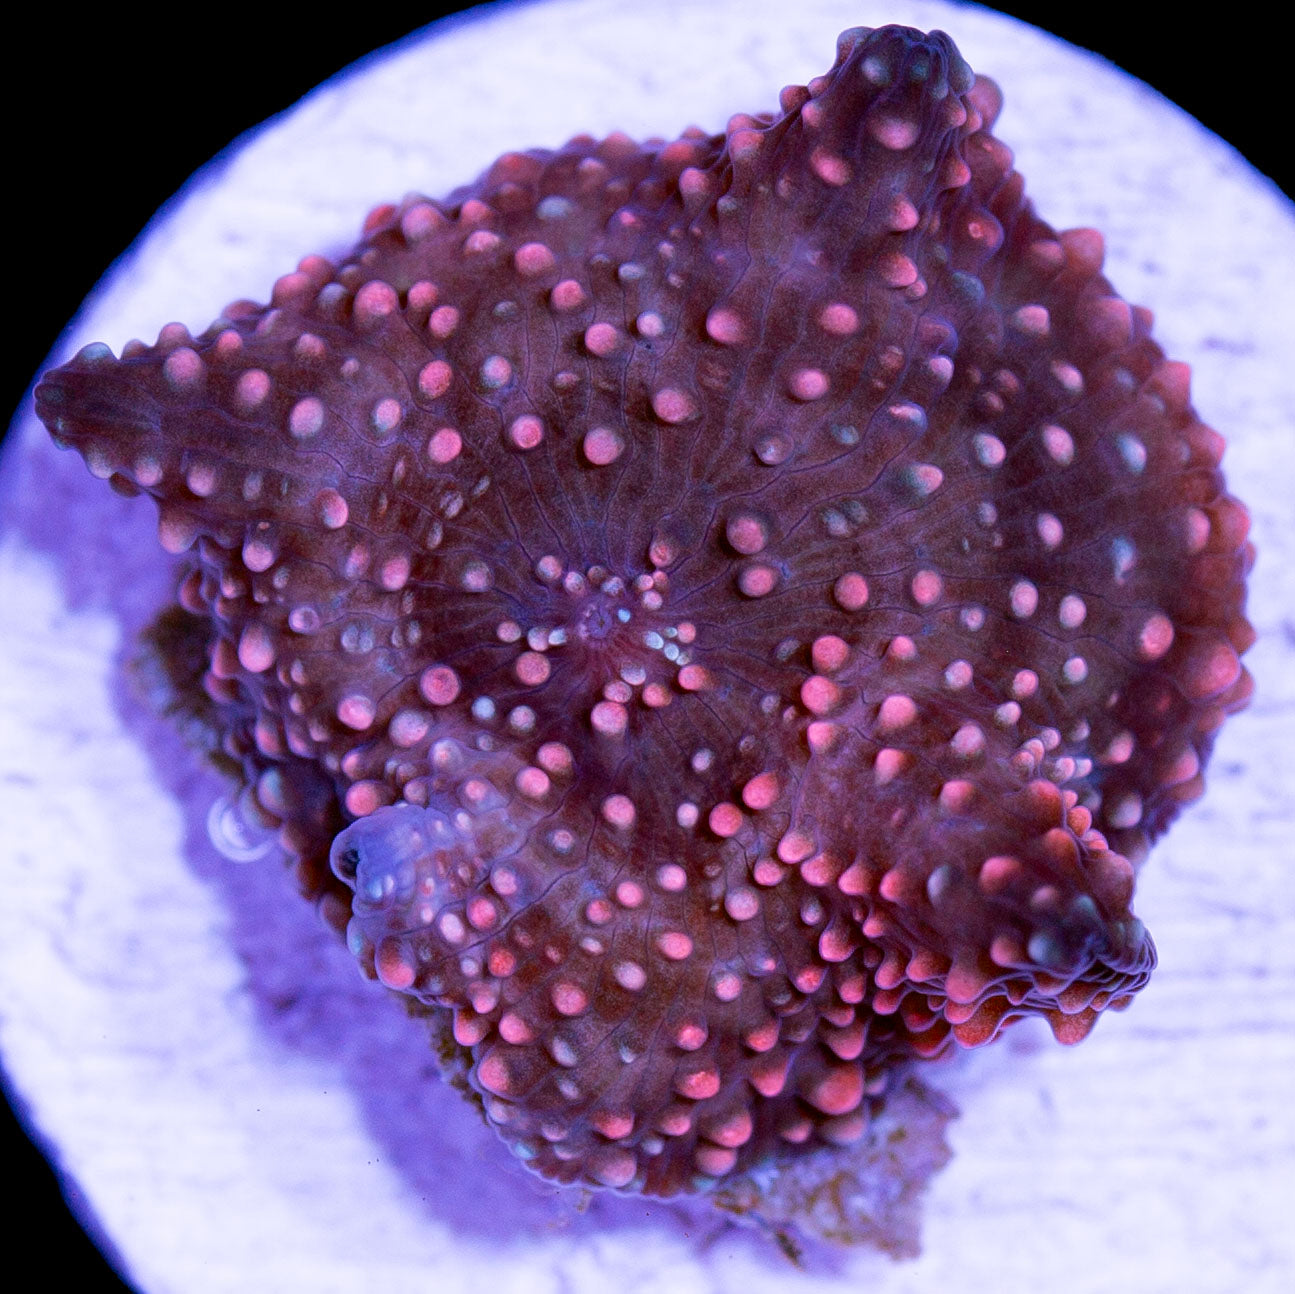 Red Speckled Mushroom